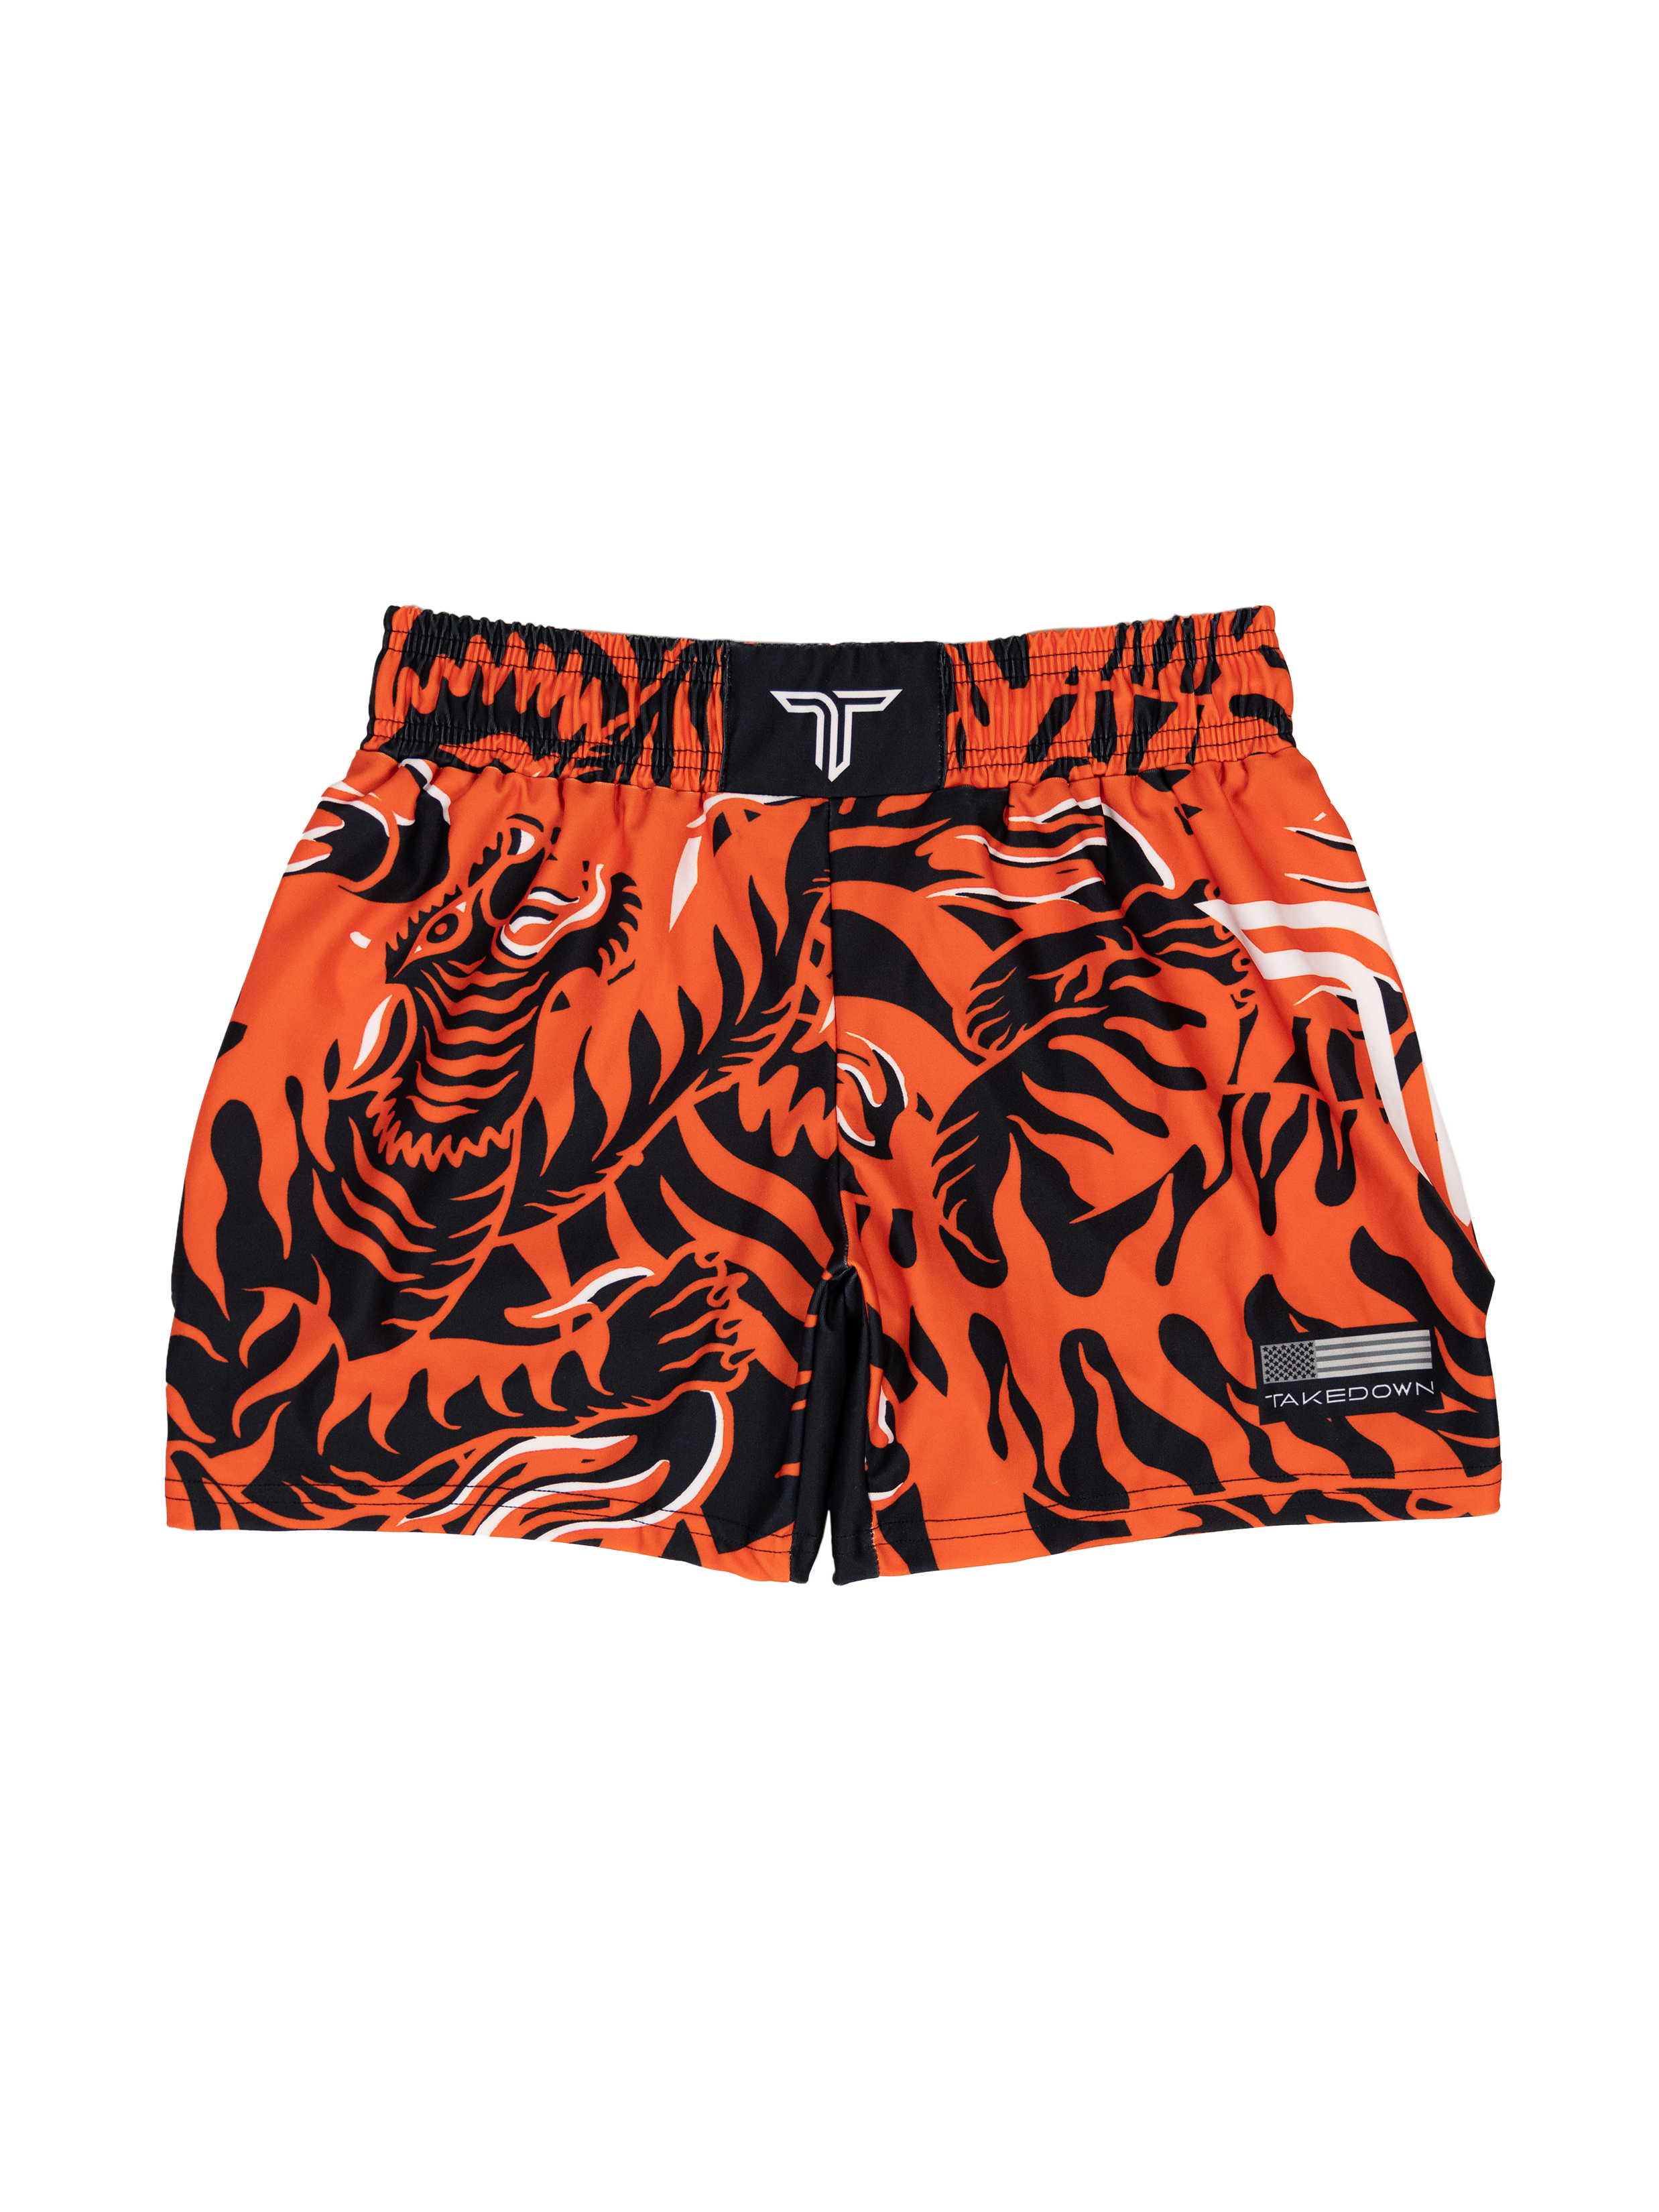 'Tiger Fight' Women's Fight Shorts - Caution Orange (3